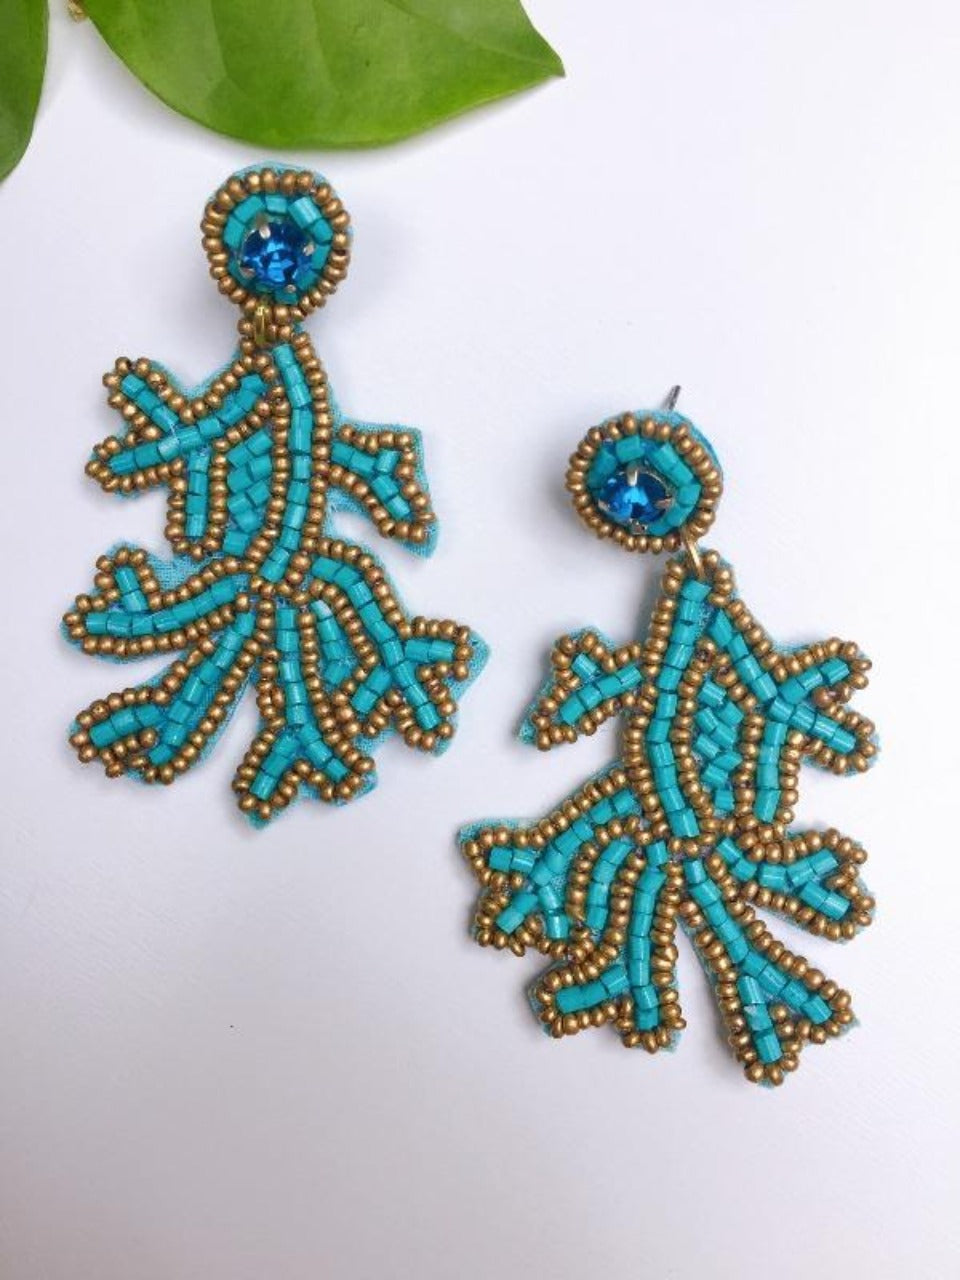 Turquoise beaded earrings